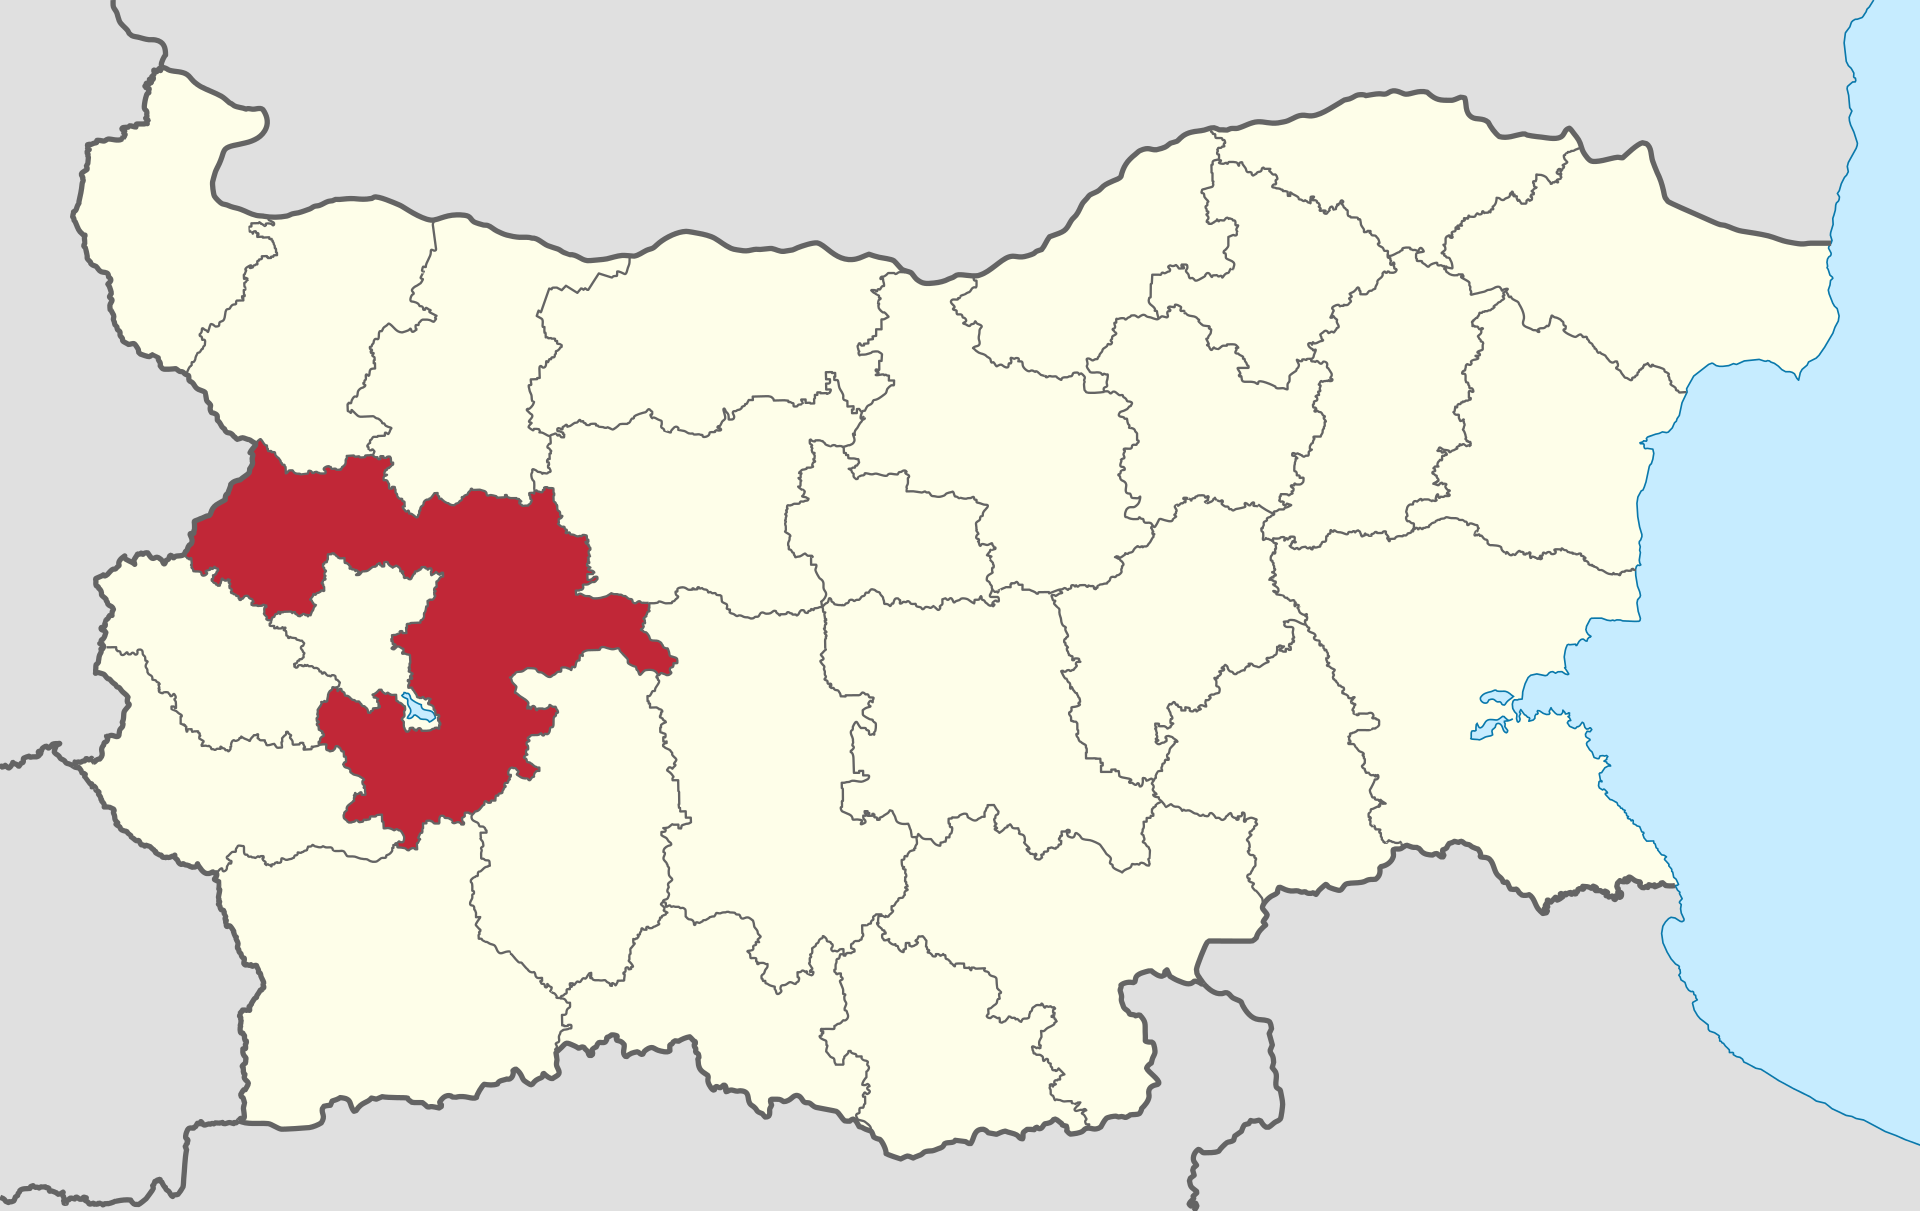 Vasil Appartments Urbex location or around the region Sofia, Bulgaria